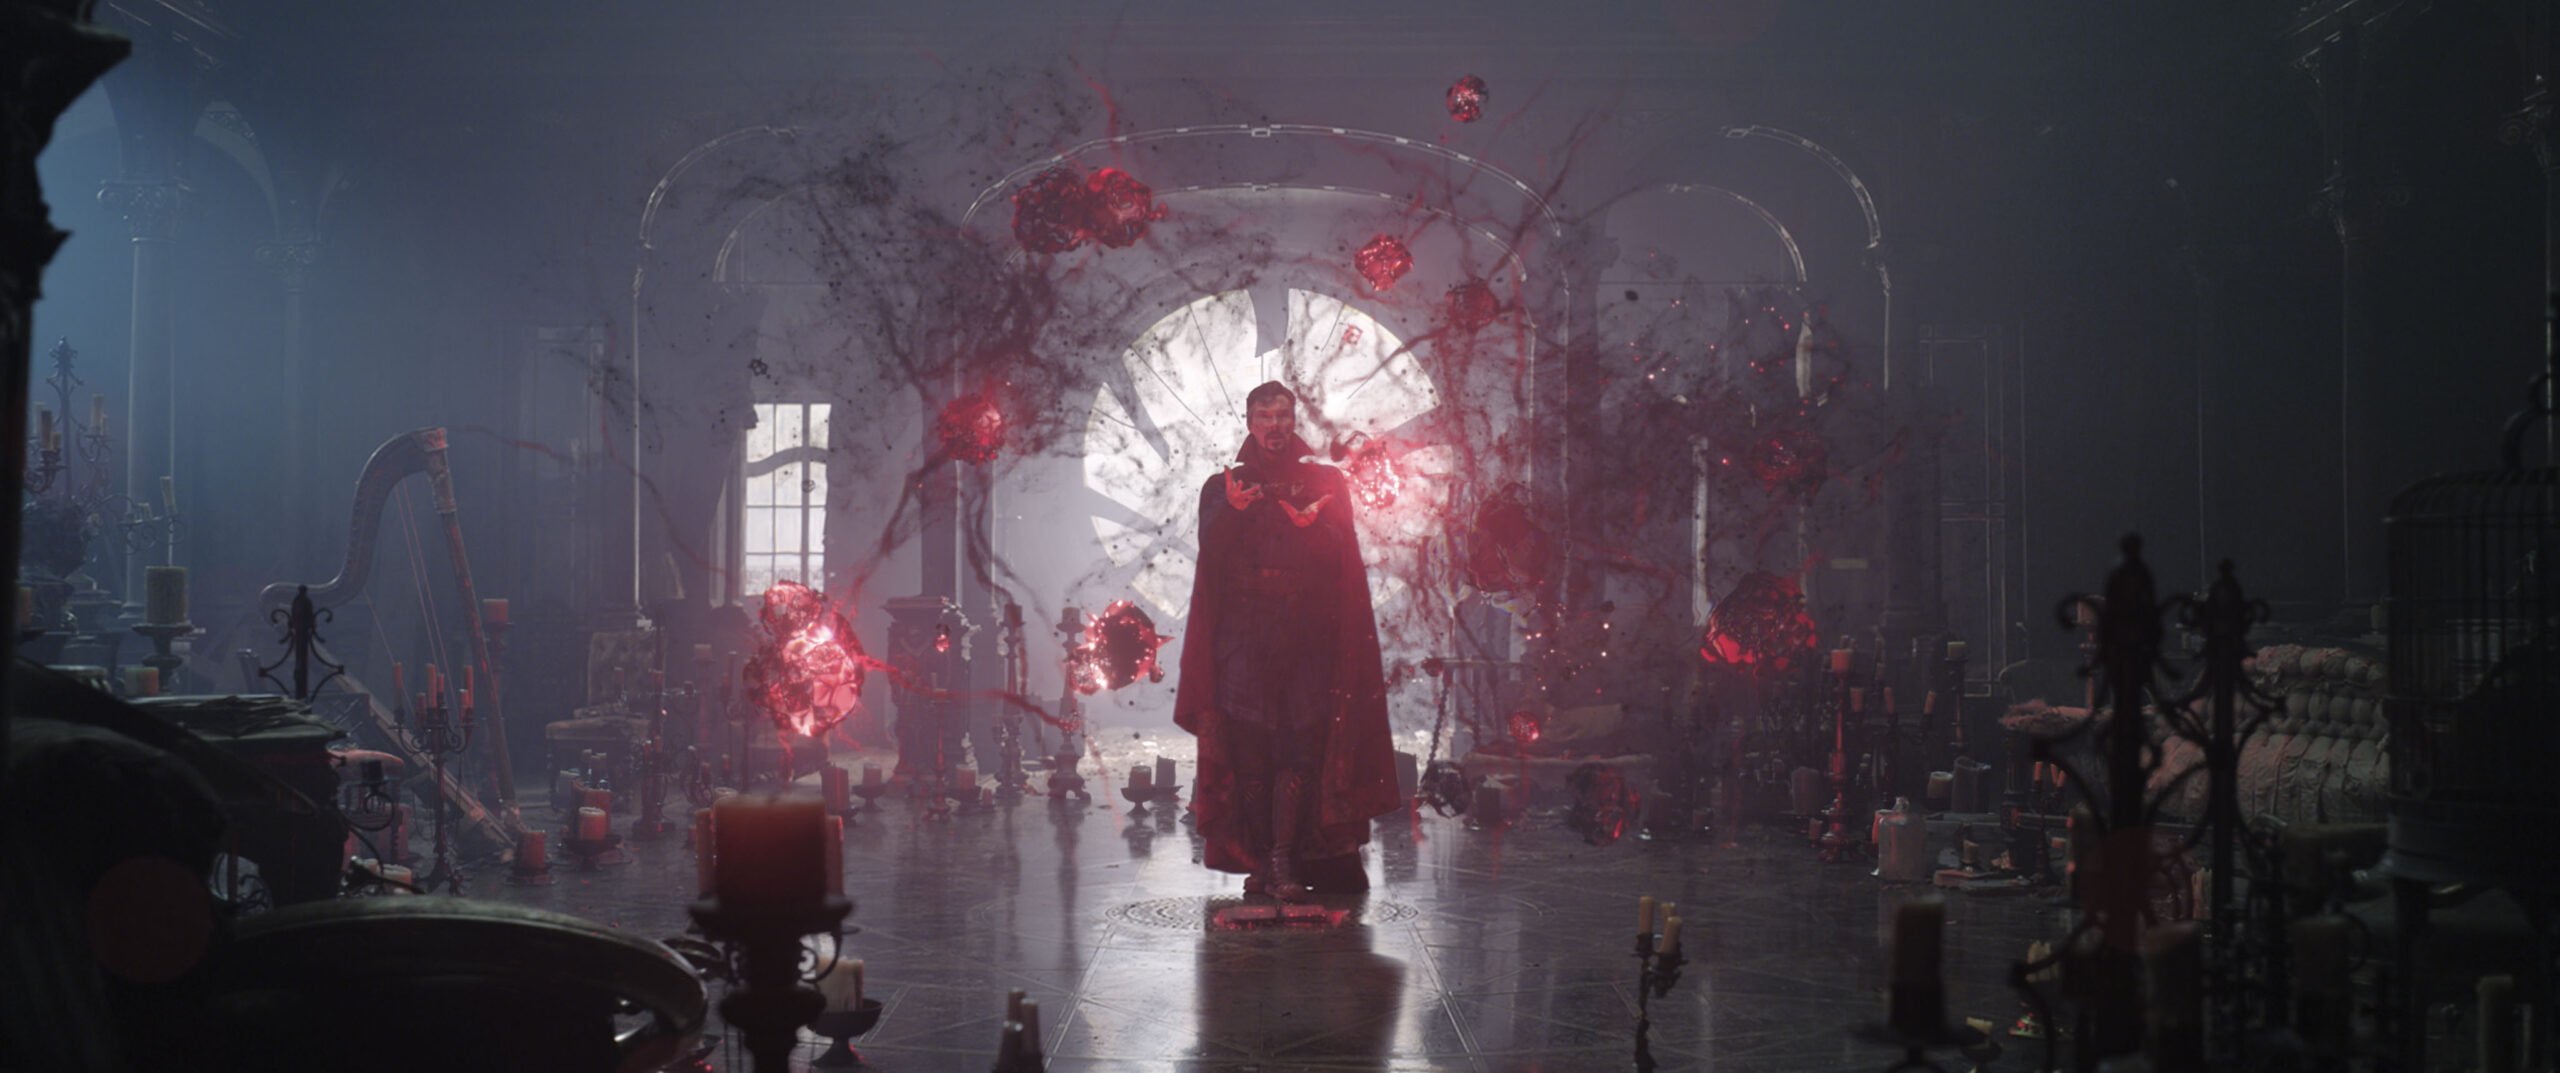 Stephen Strange (Benedict Cumberbatch) - Doctor Strange in the Multiverse of Madness